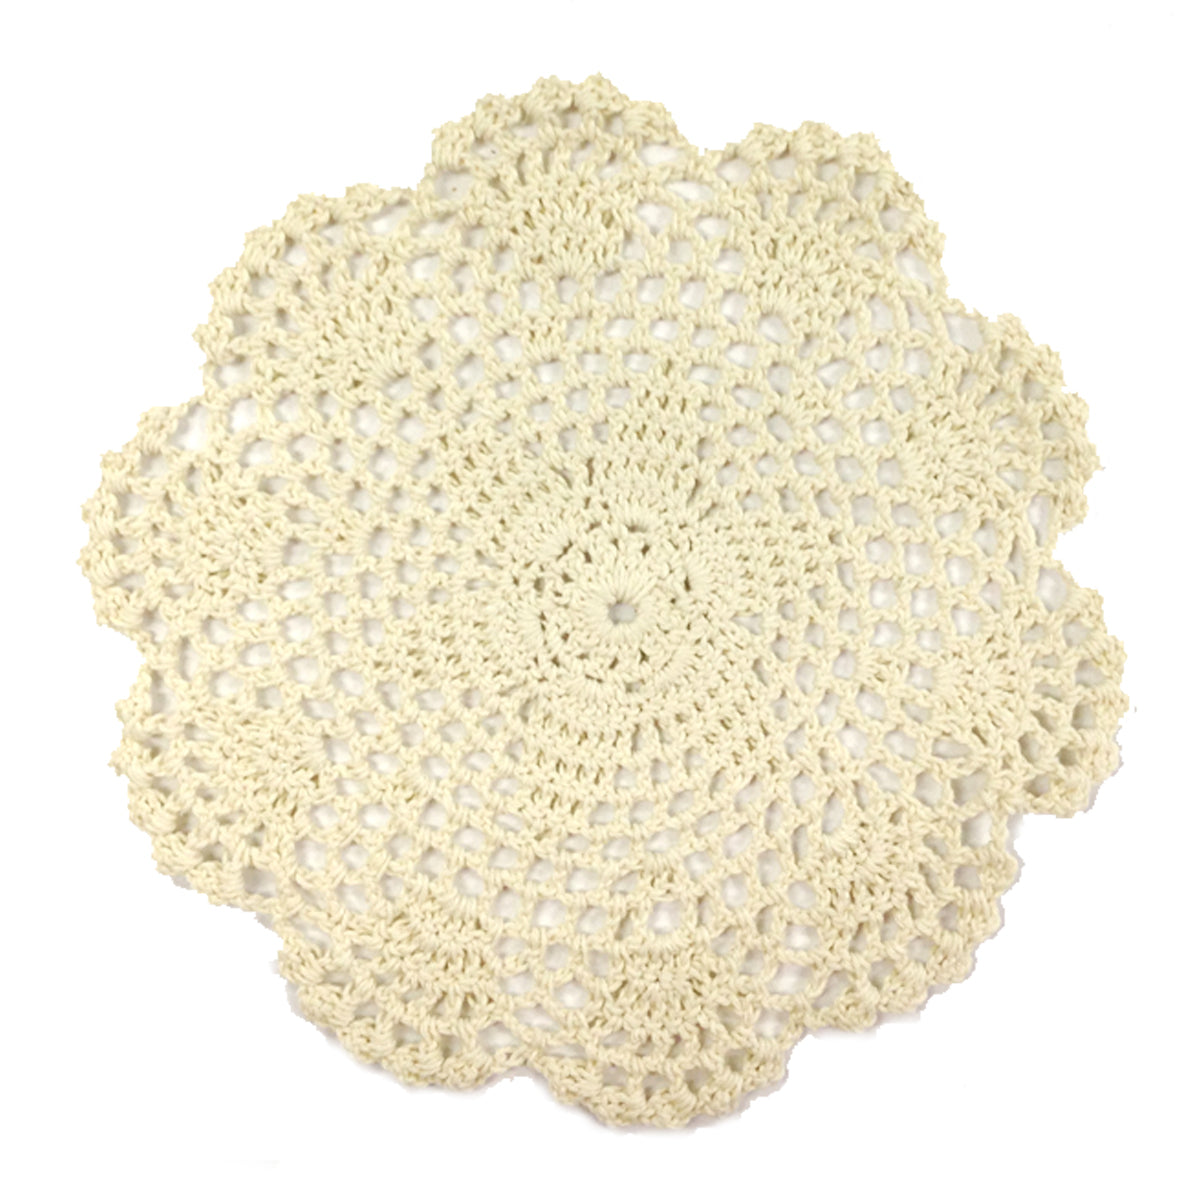 Wrapables Large Beige Round Crochet Cotton Doily Placemat, Set of 4